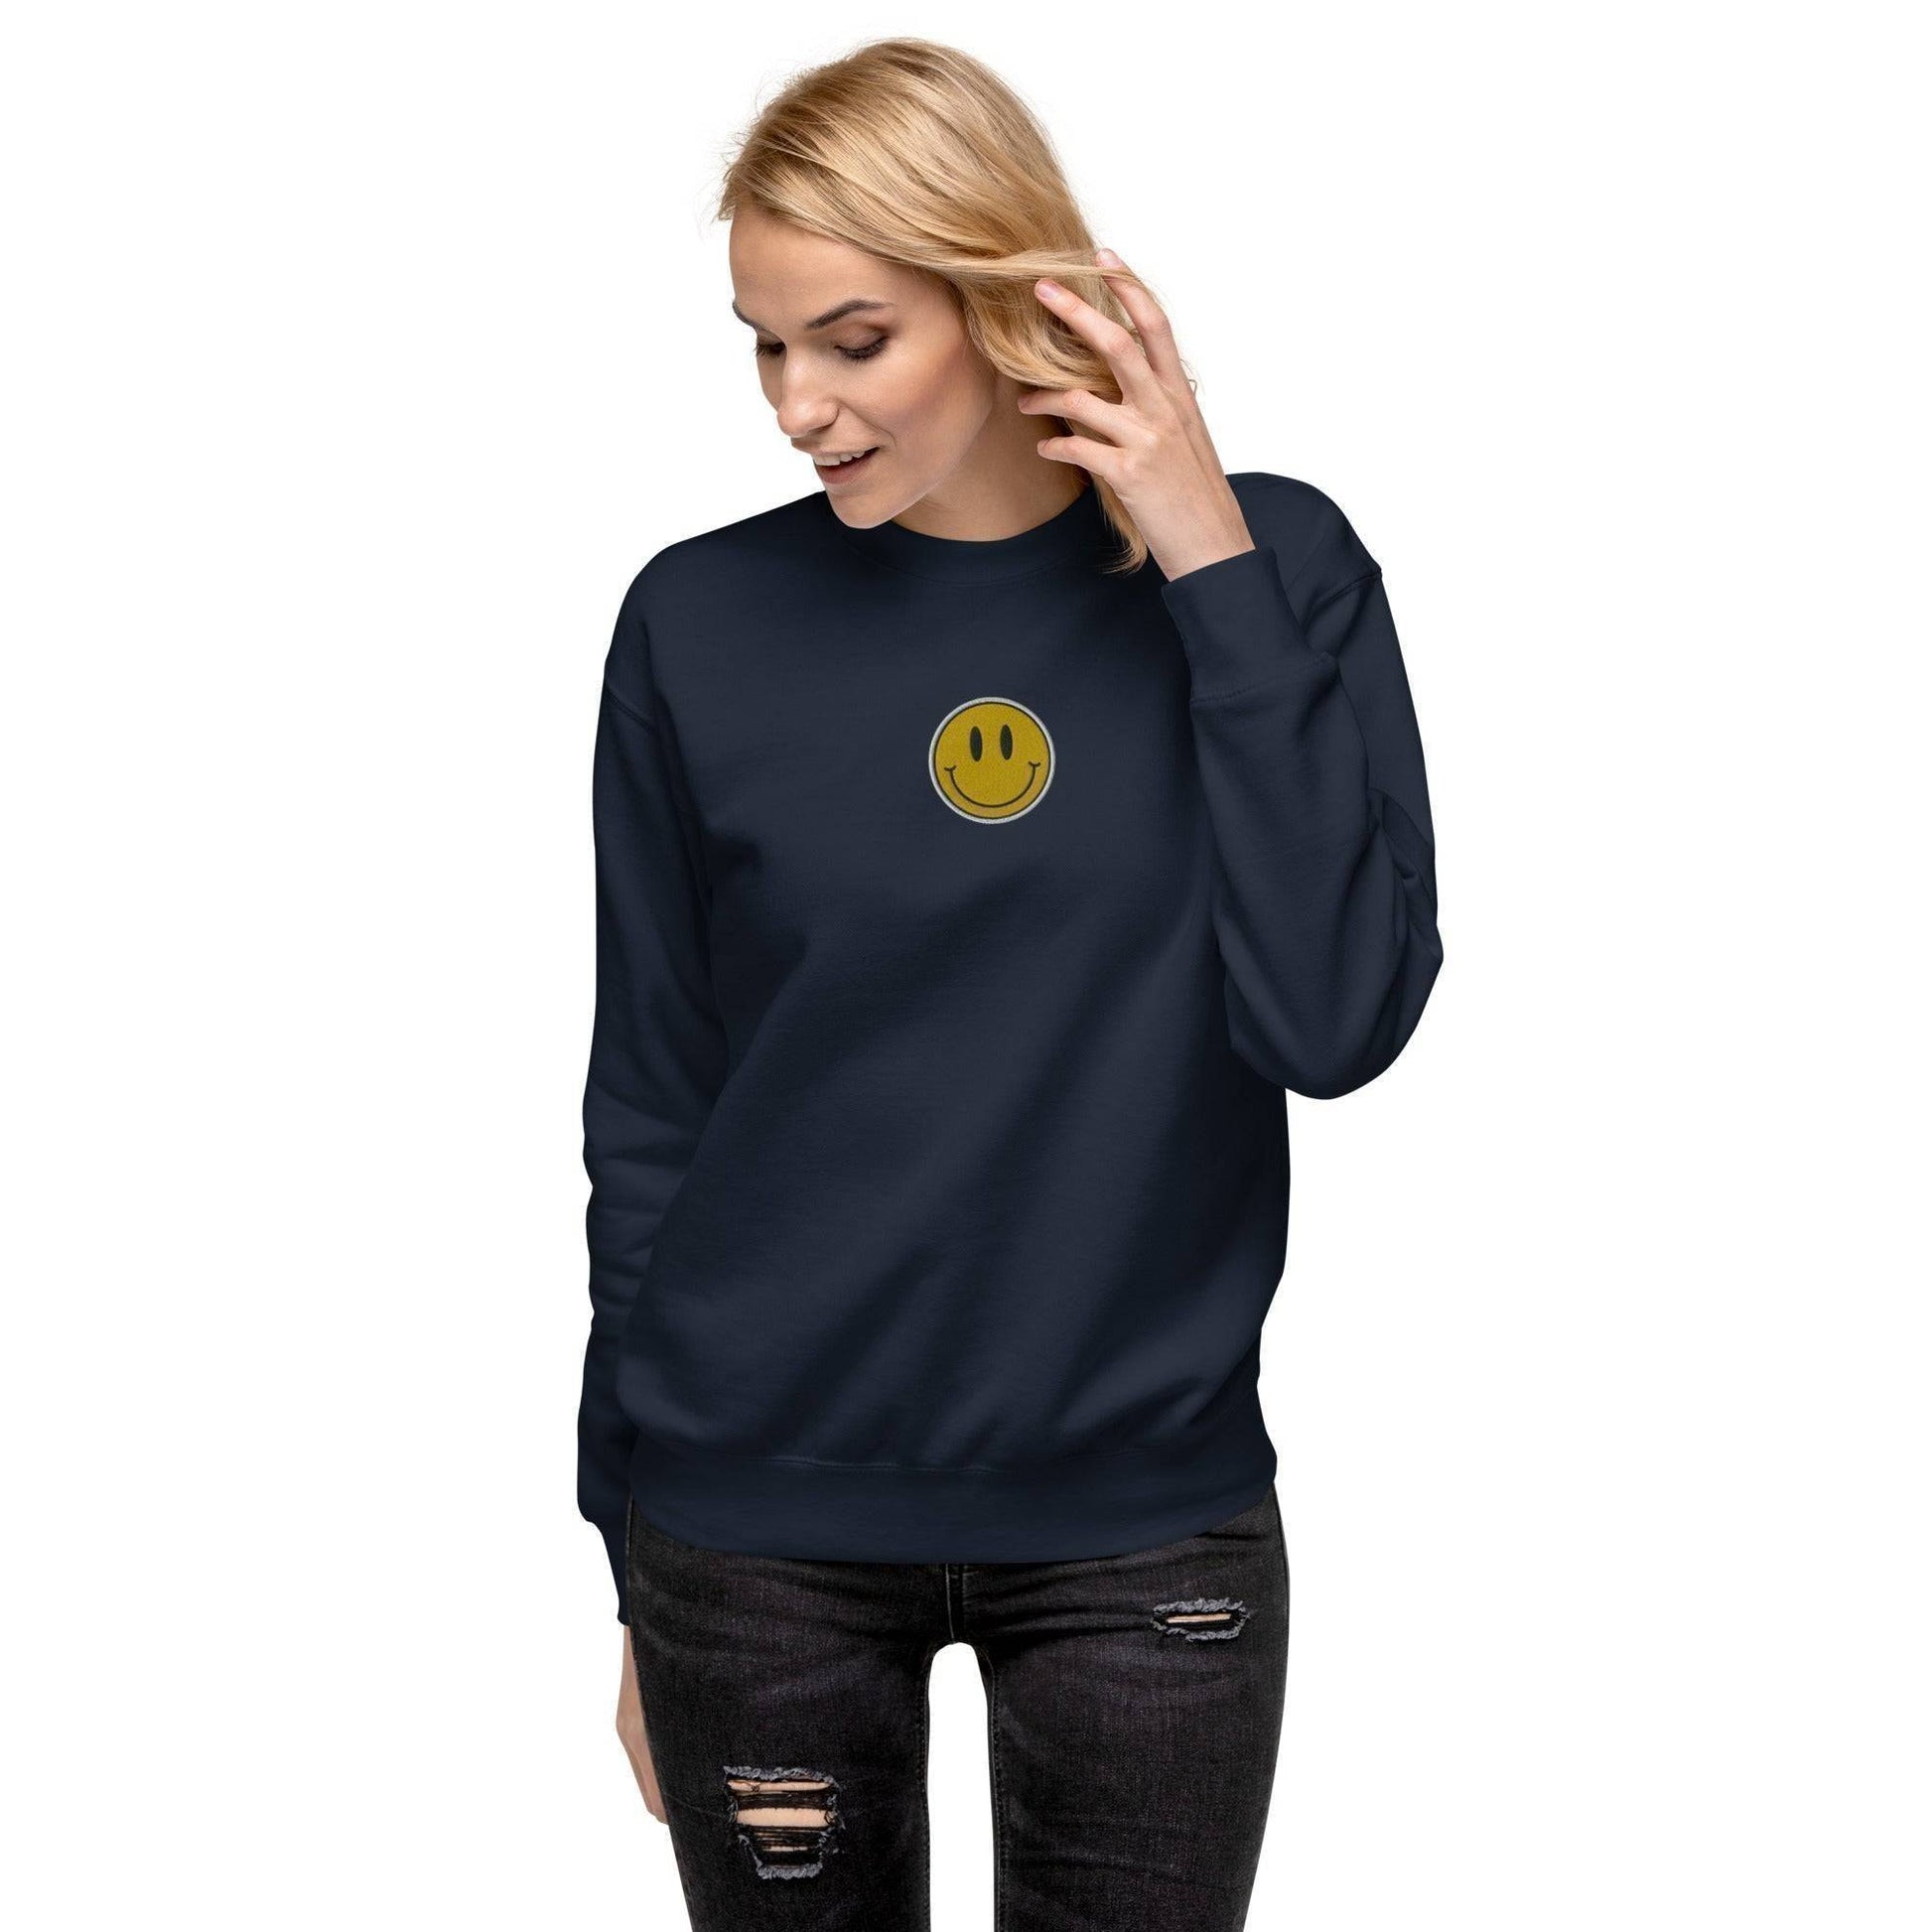 You Should Smile More Embroidered Sweatshirt Navy Blazer